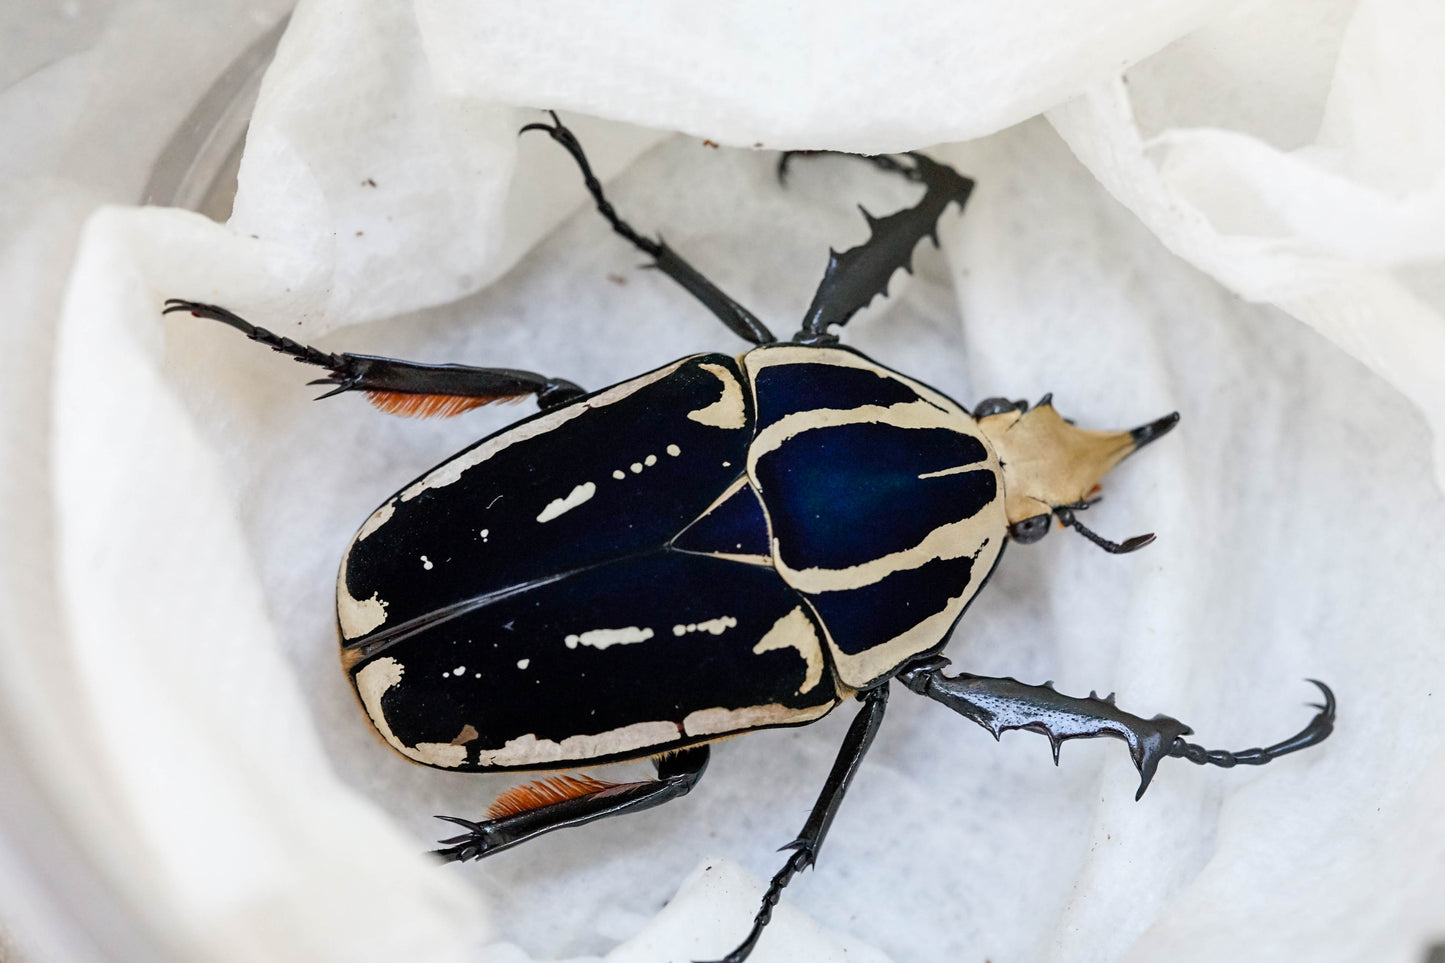 LARVAE: "Blue' Giant Flower Beetle (Mecynorrhina torquata ugandensis)